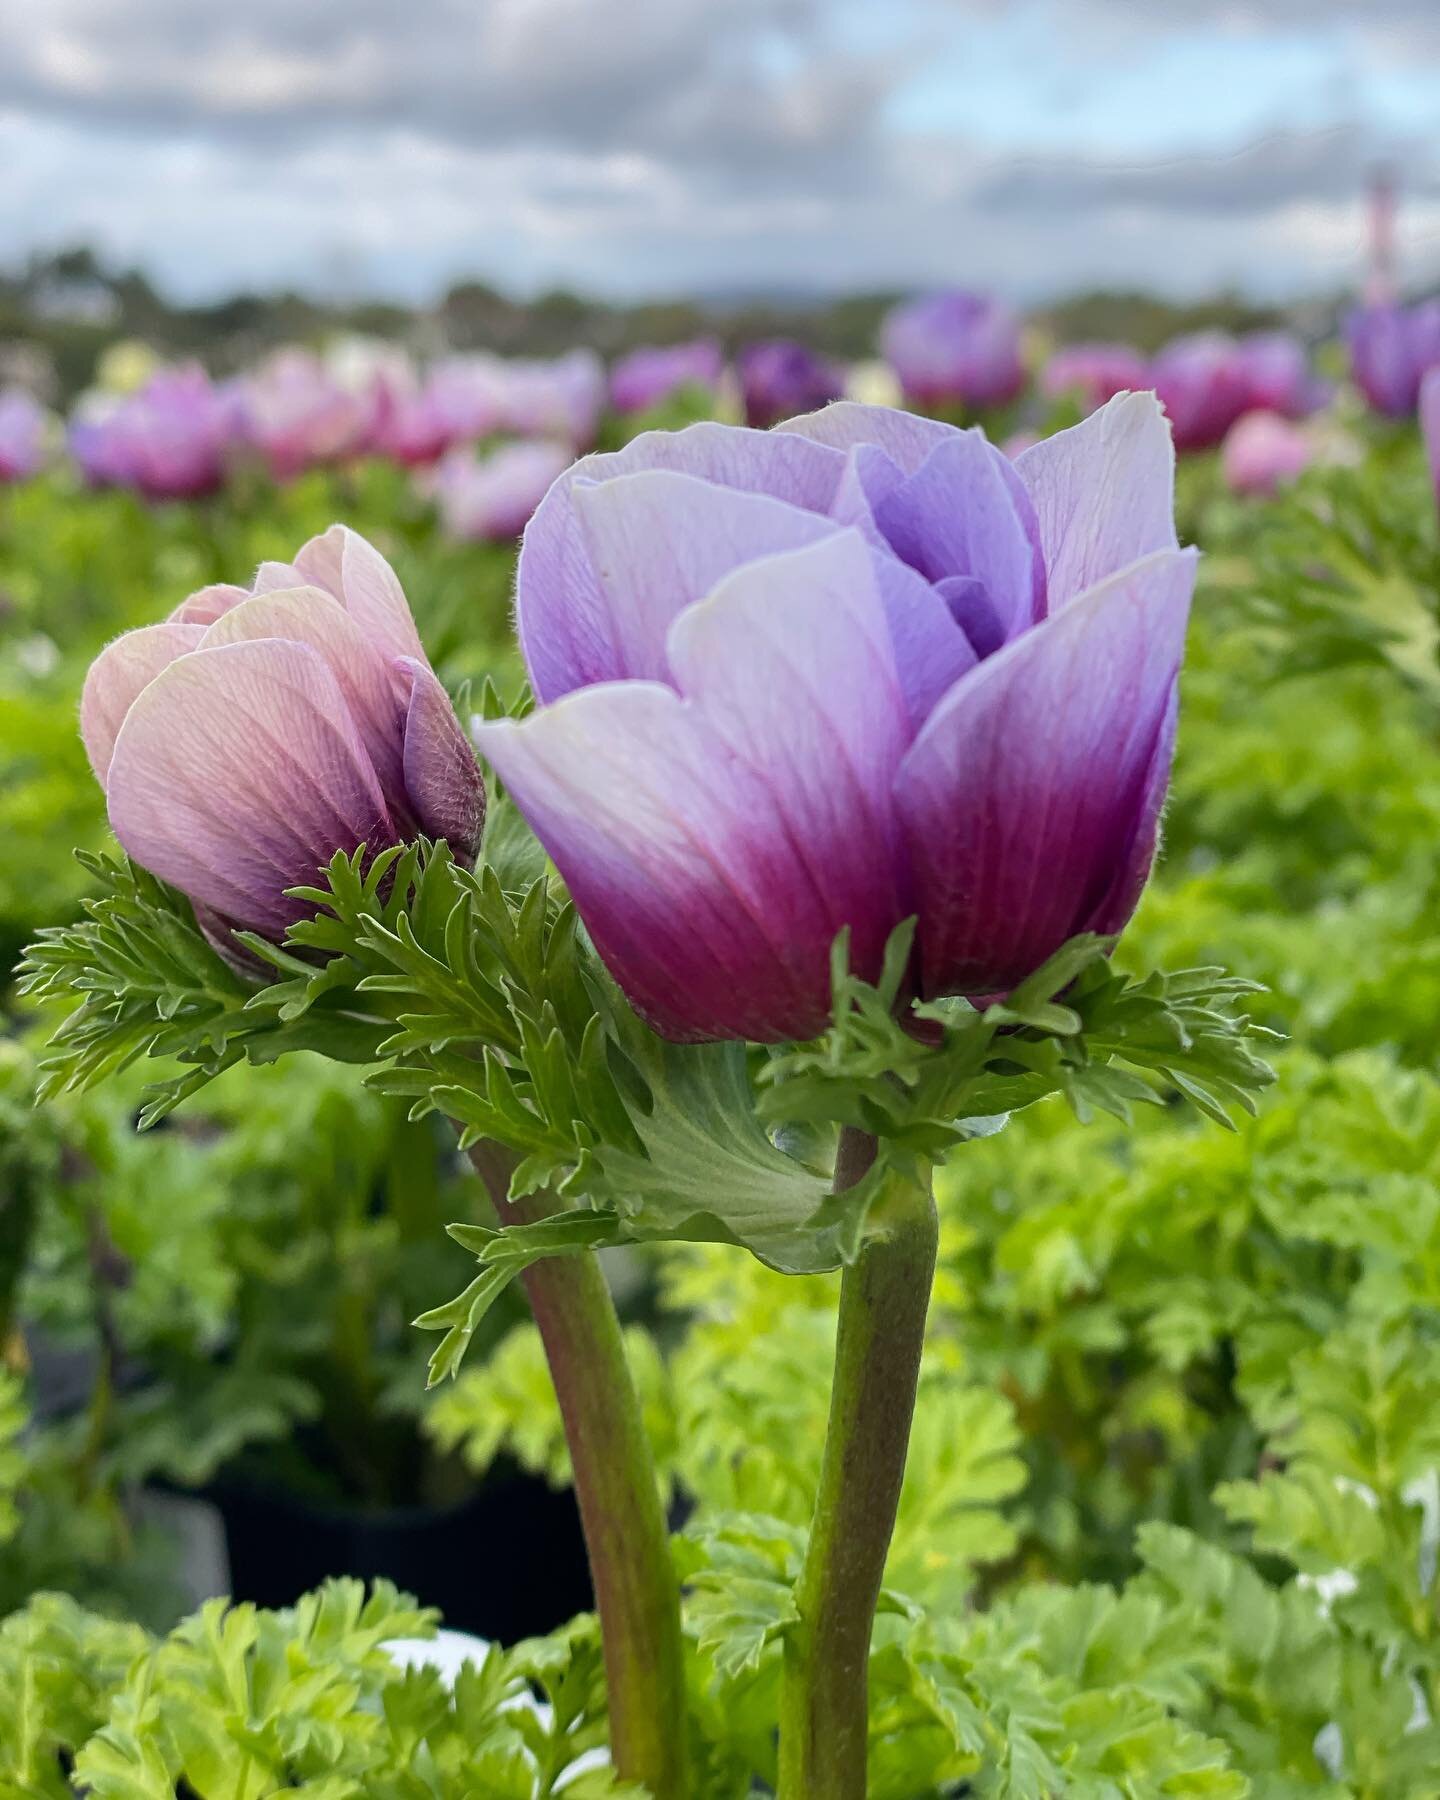 Anemone&rsquo;s🌸 Spectacular show of color! 🌱 #premiercolornursery  #gourmetgrown #anemone #wholesalegrower  #flowers  #garden